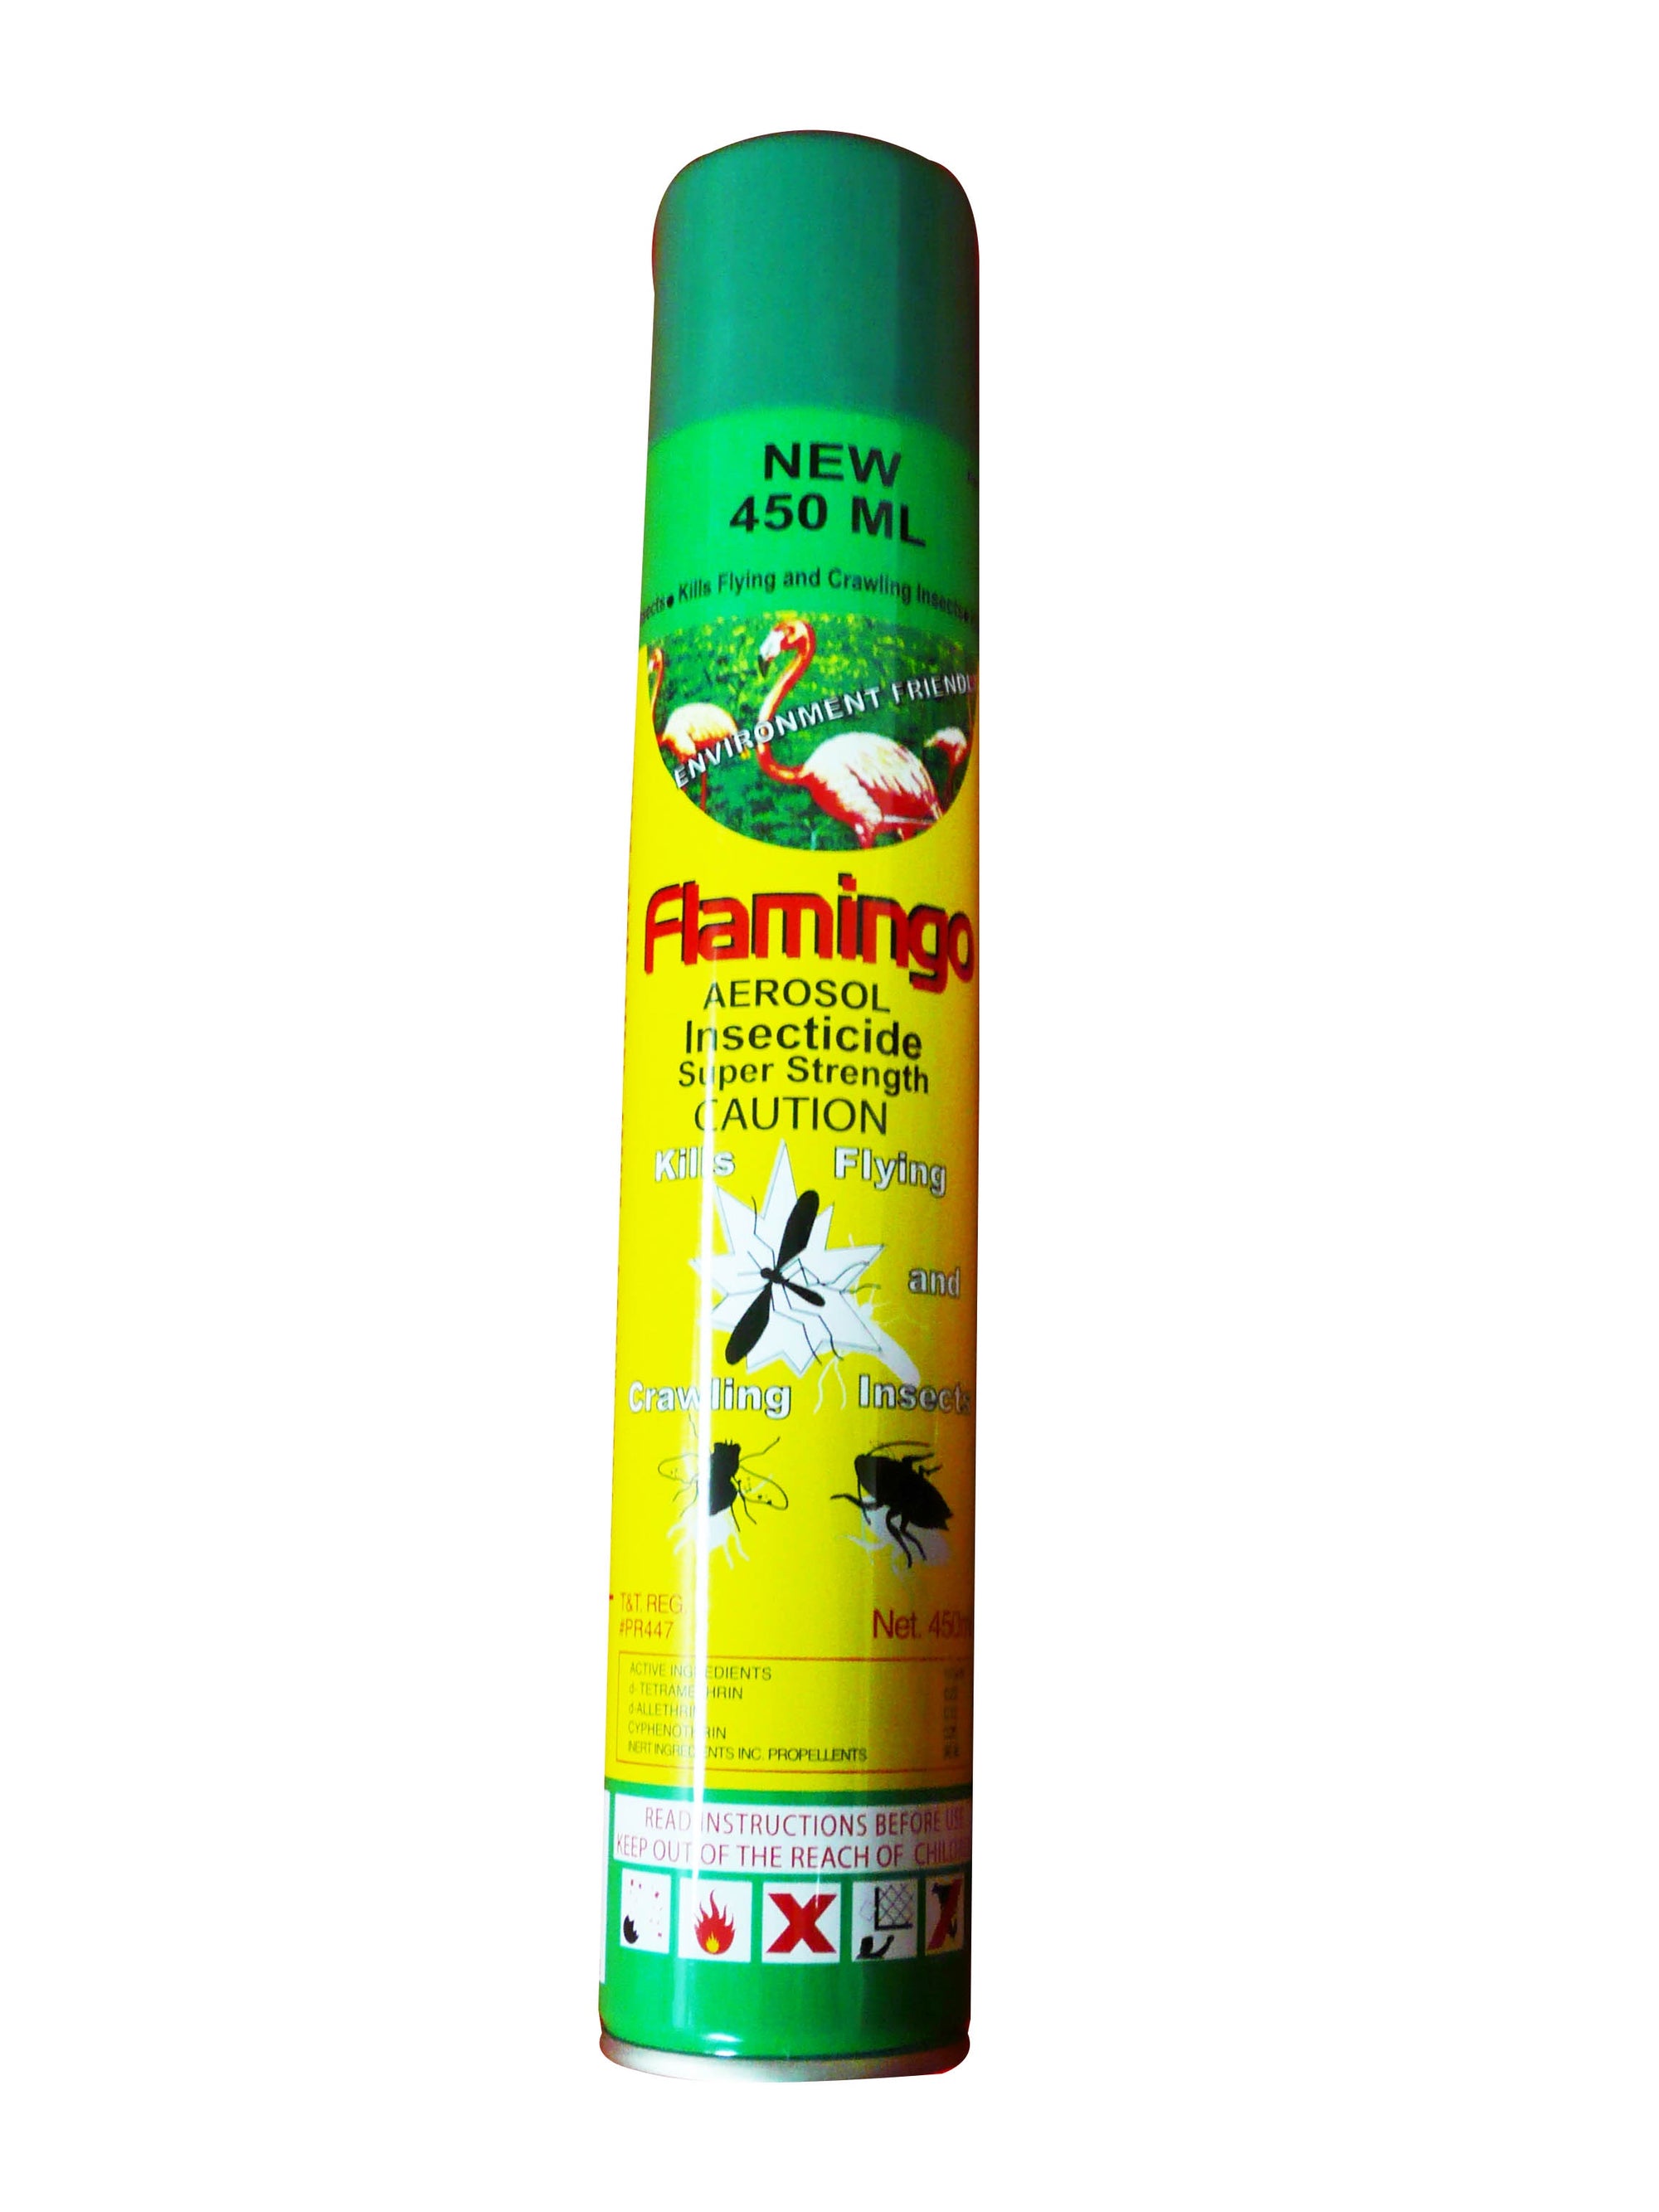 FLAMINGO Insecticide 450 ml